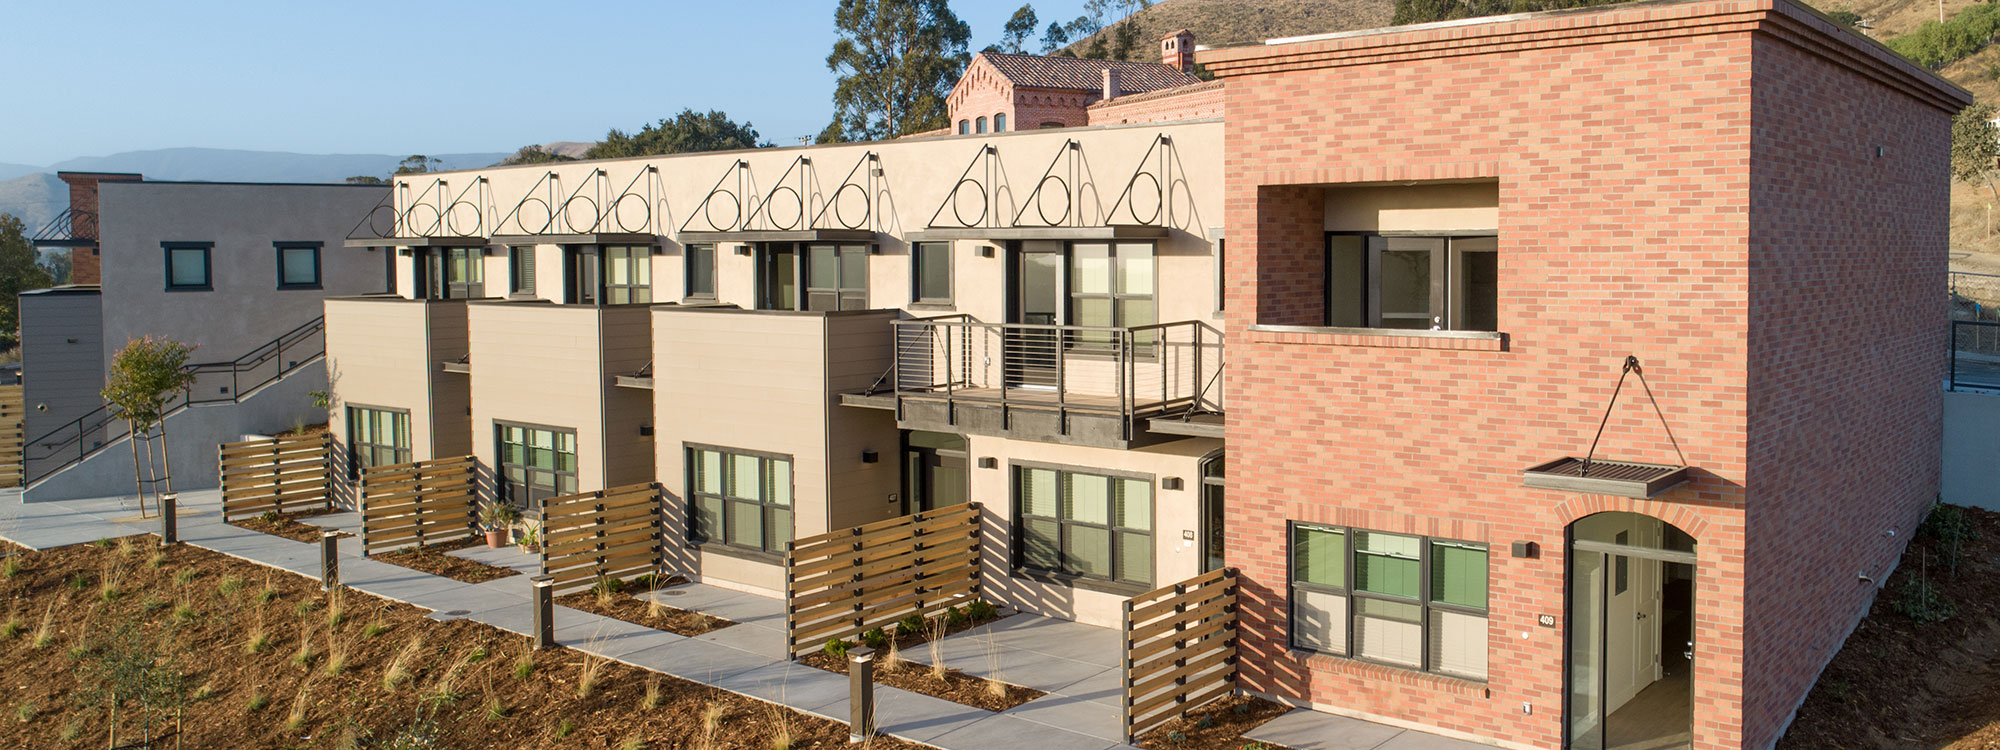 Central Coast Construction Company - San Luis Obispo, California Apartment Building Builder - JW Design & Construction